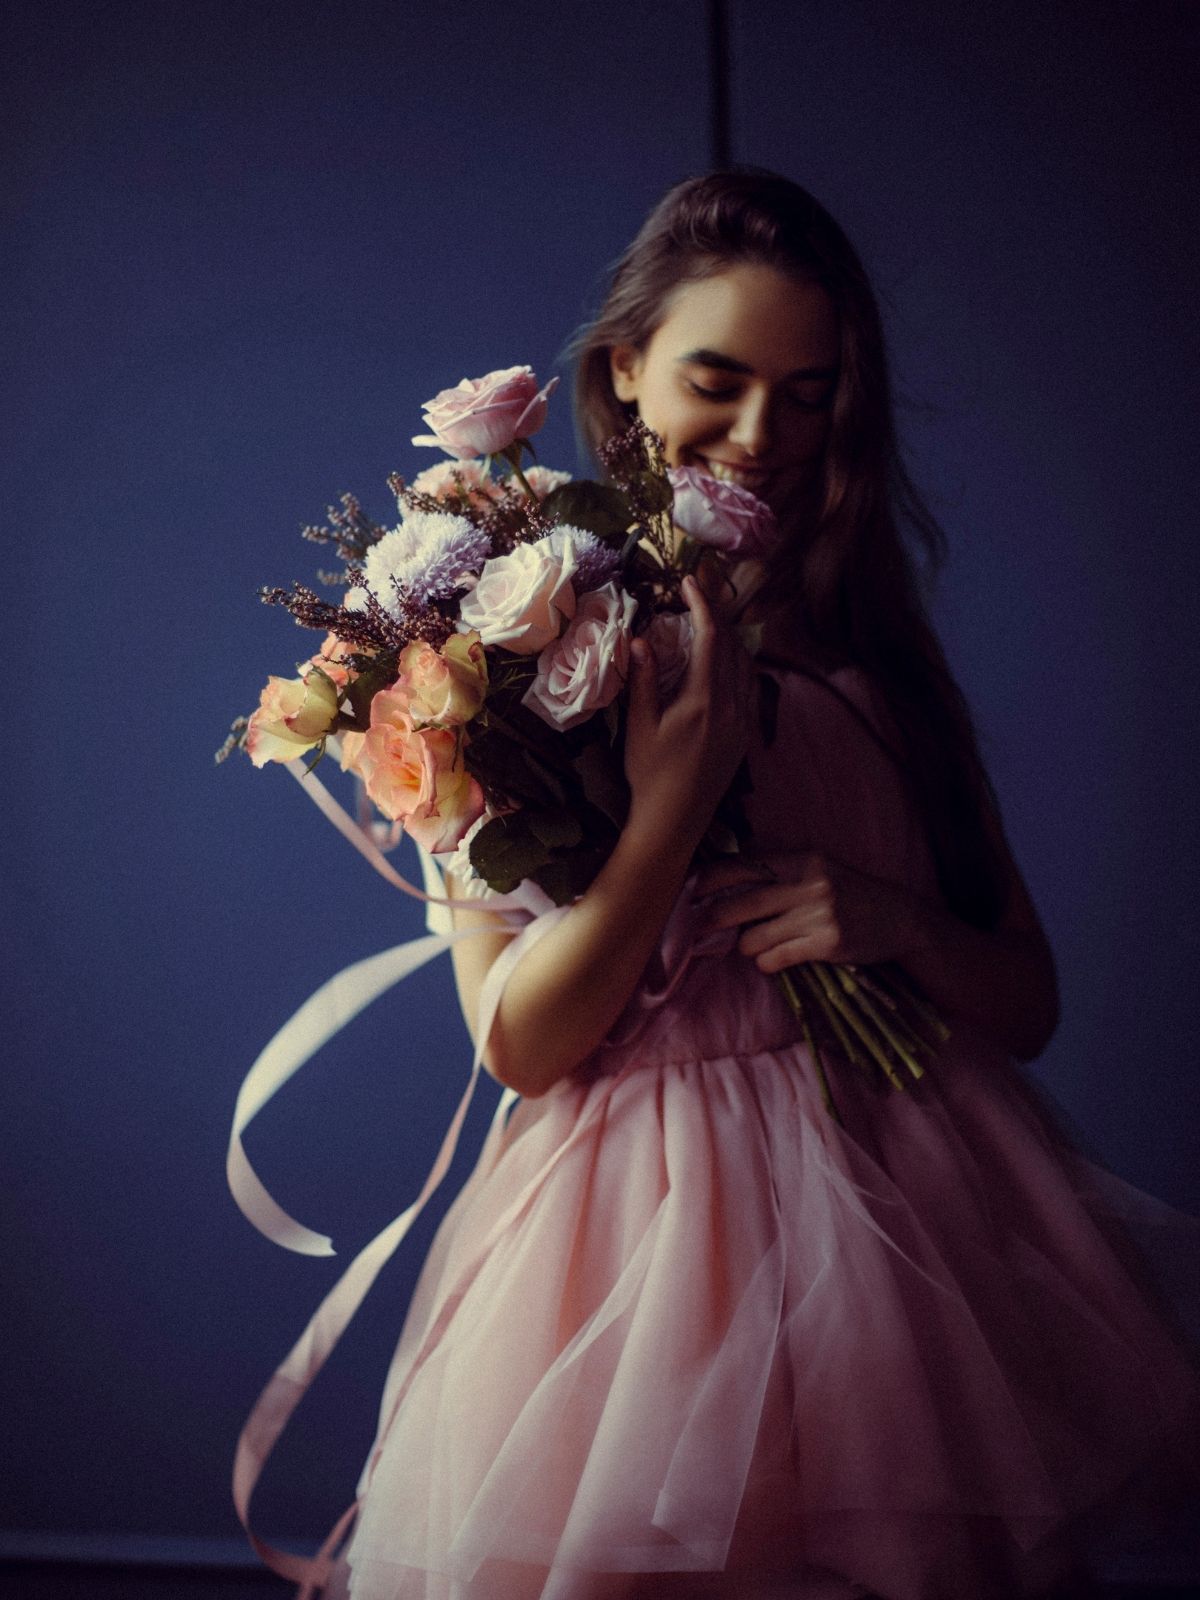 Khrystyna Didukh holding beautiful flowers